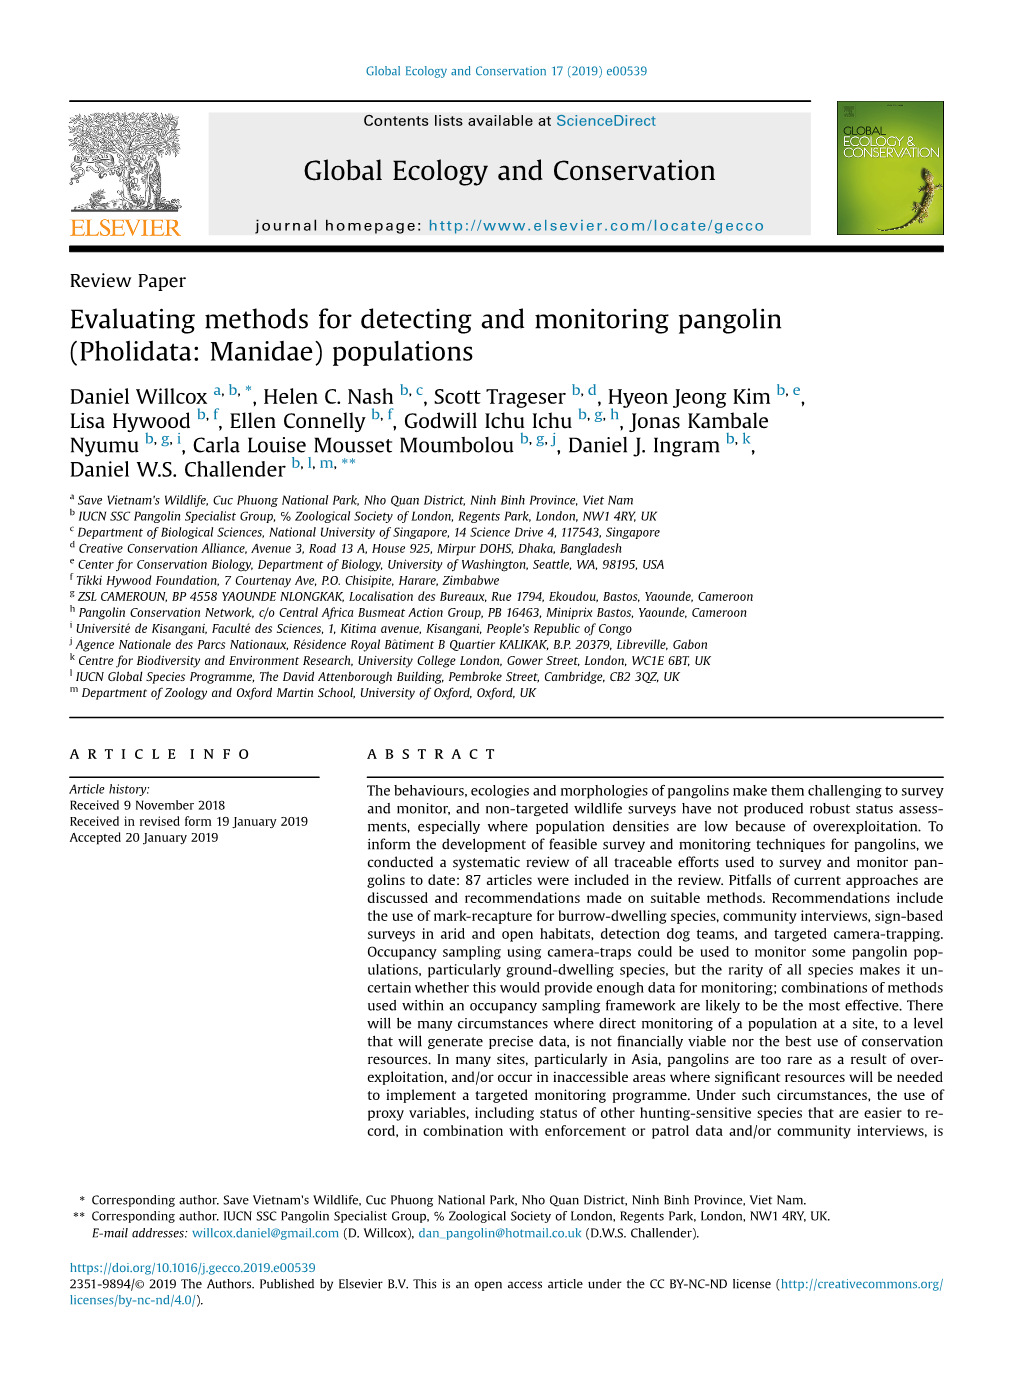 Evaluating Methods for Detecting and Monitoring Pangolin (Pholidata: Manidae) Populations